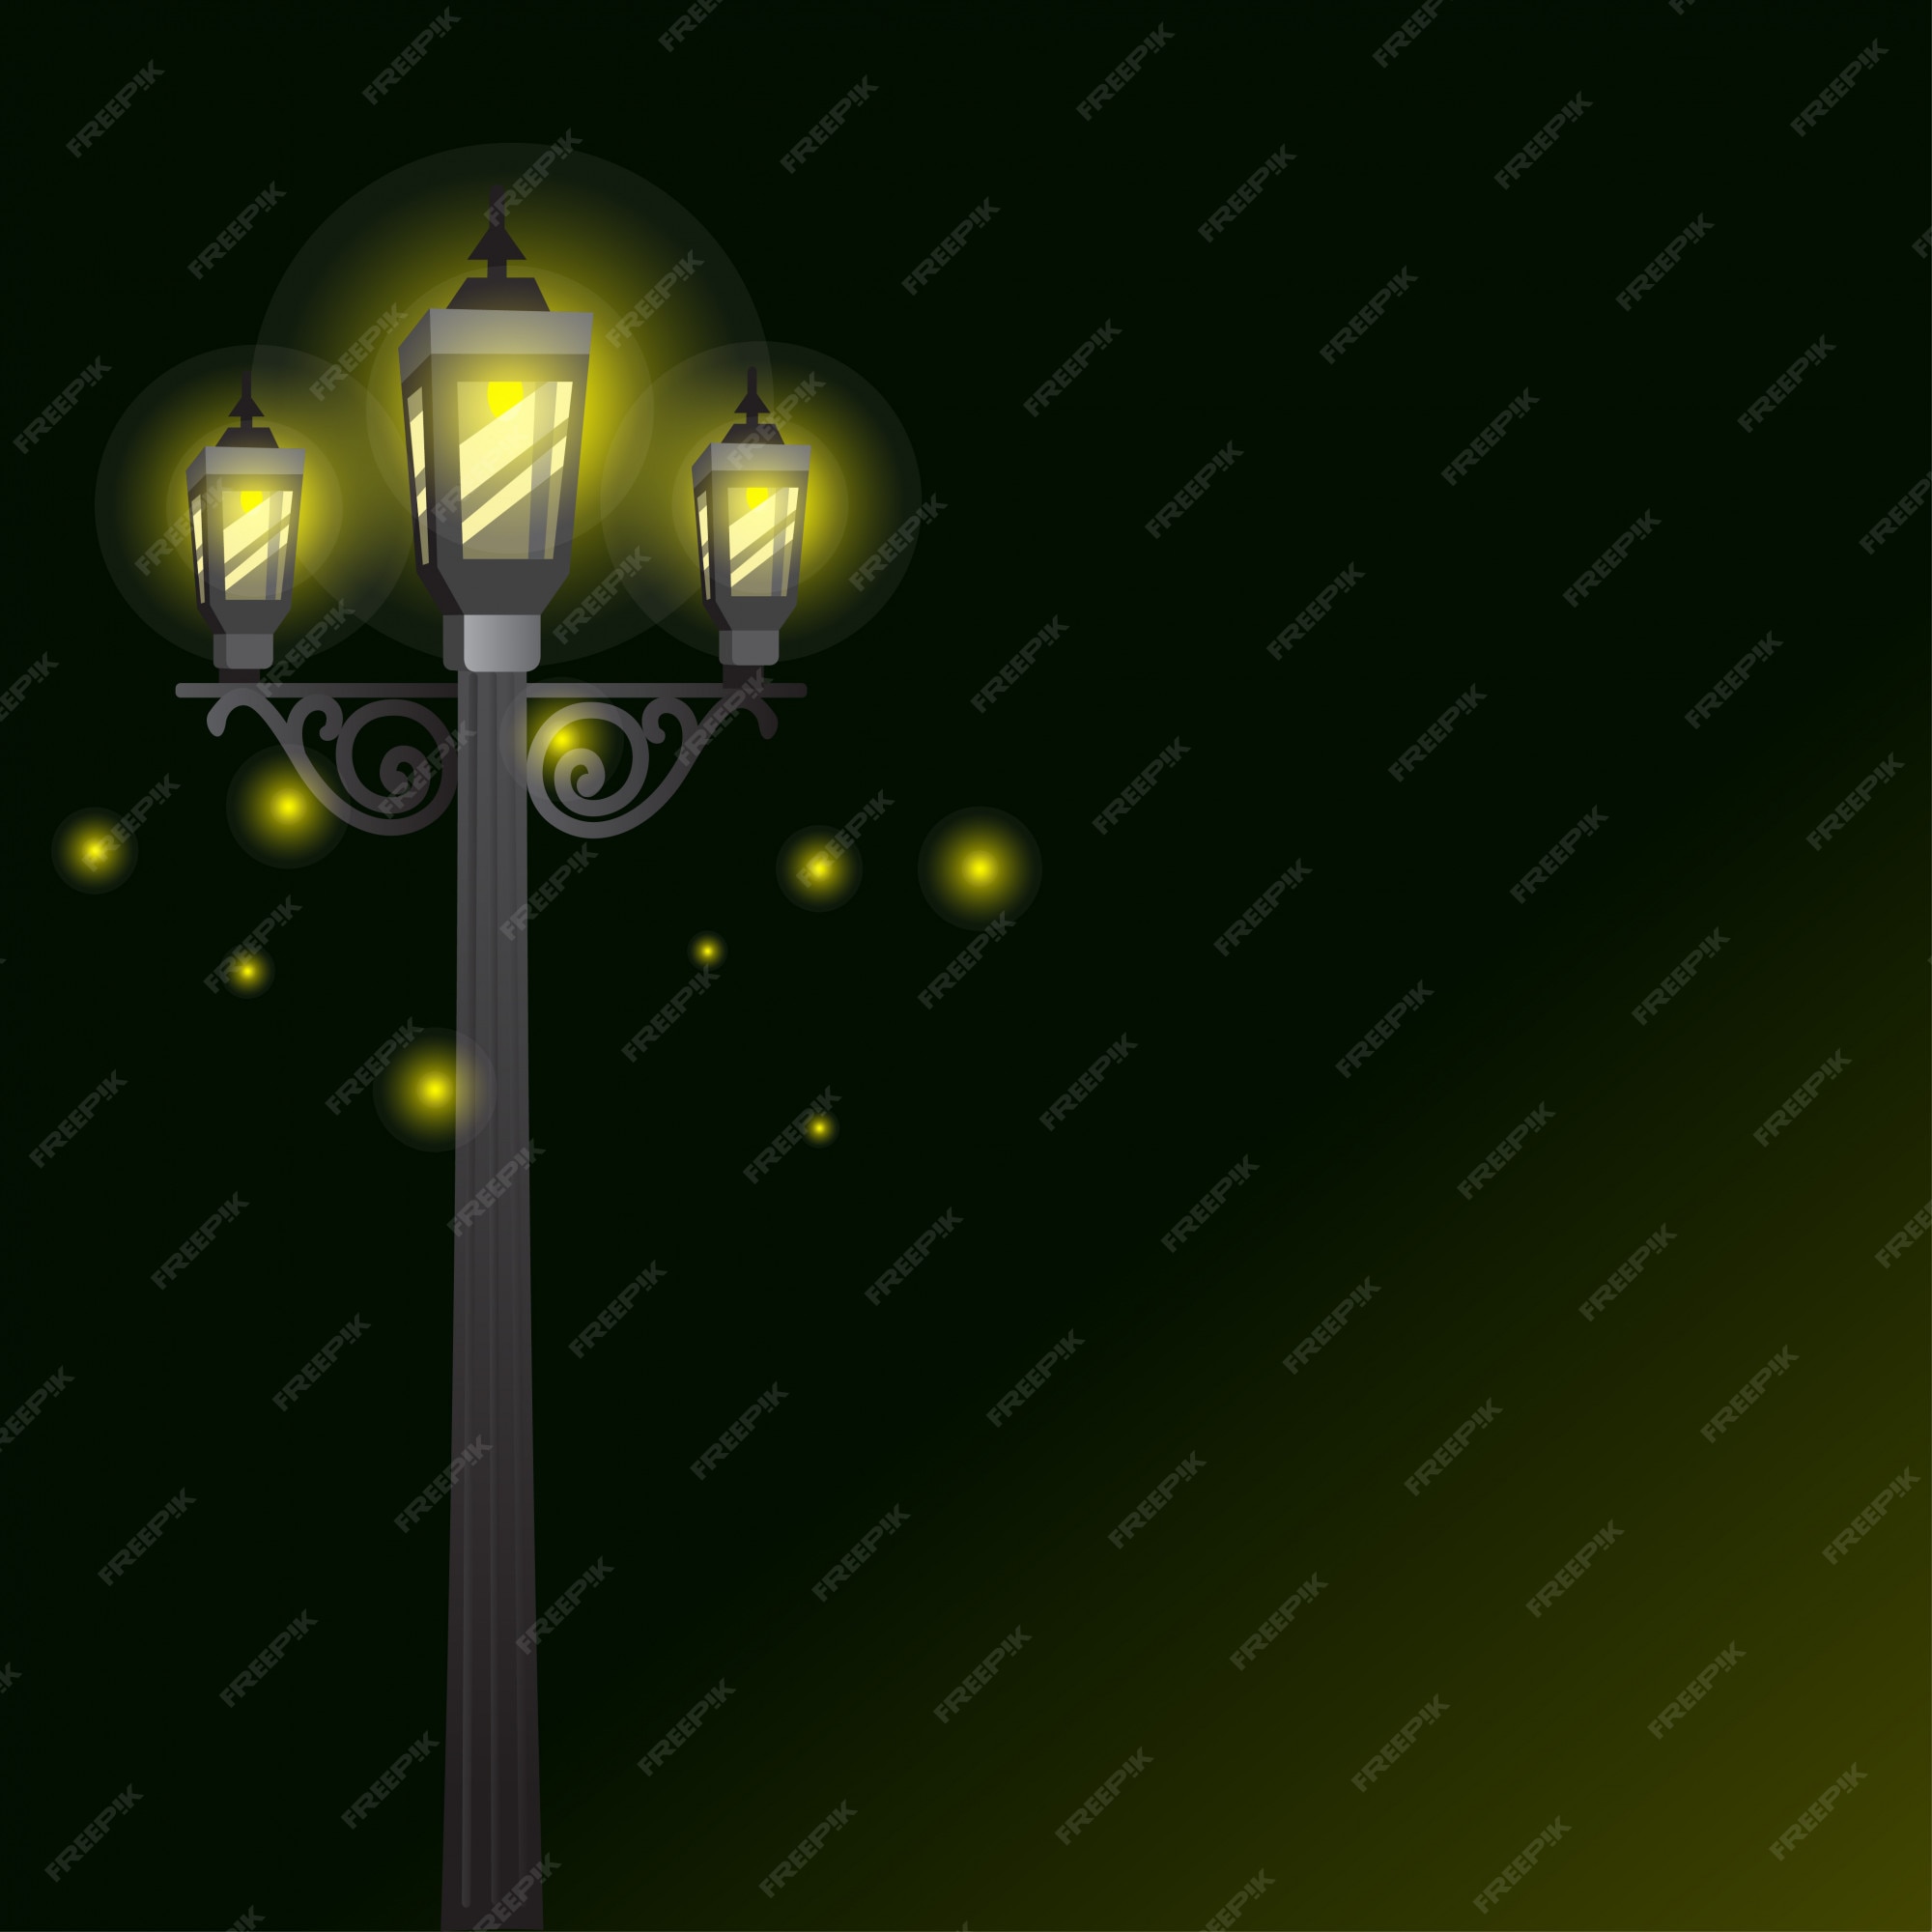 Premium Vector | Garden lamp or street lights with light effect background